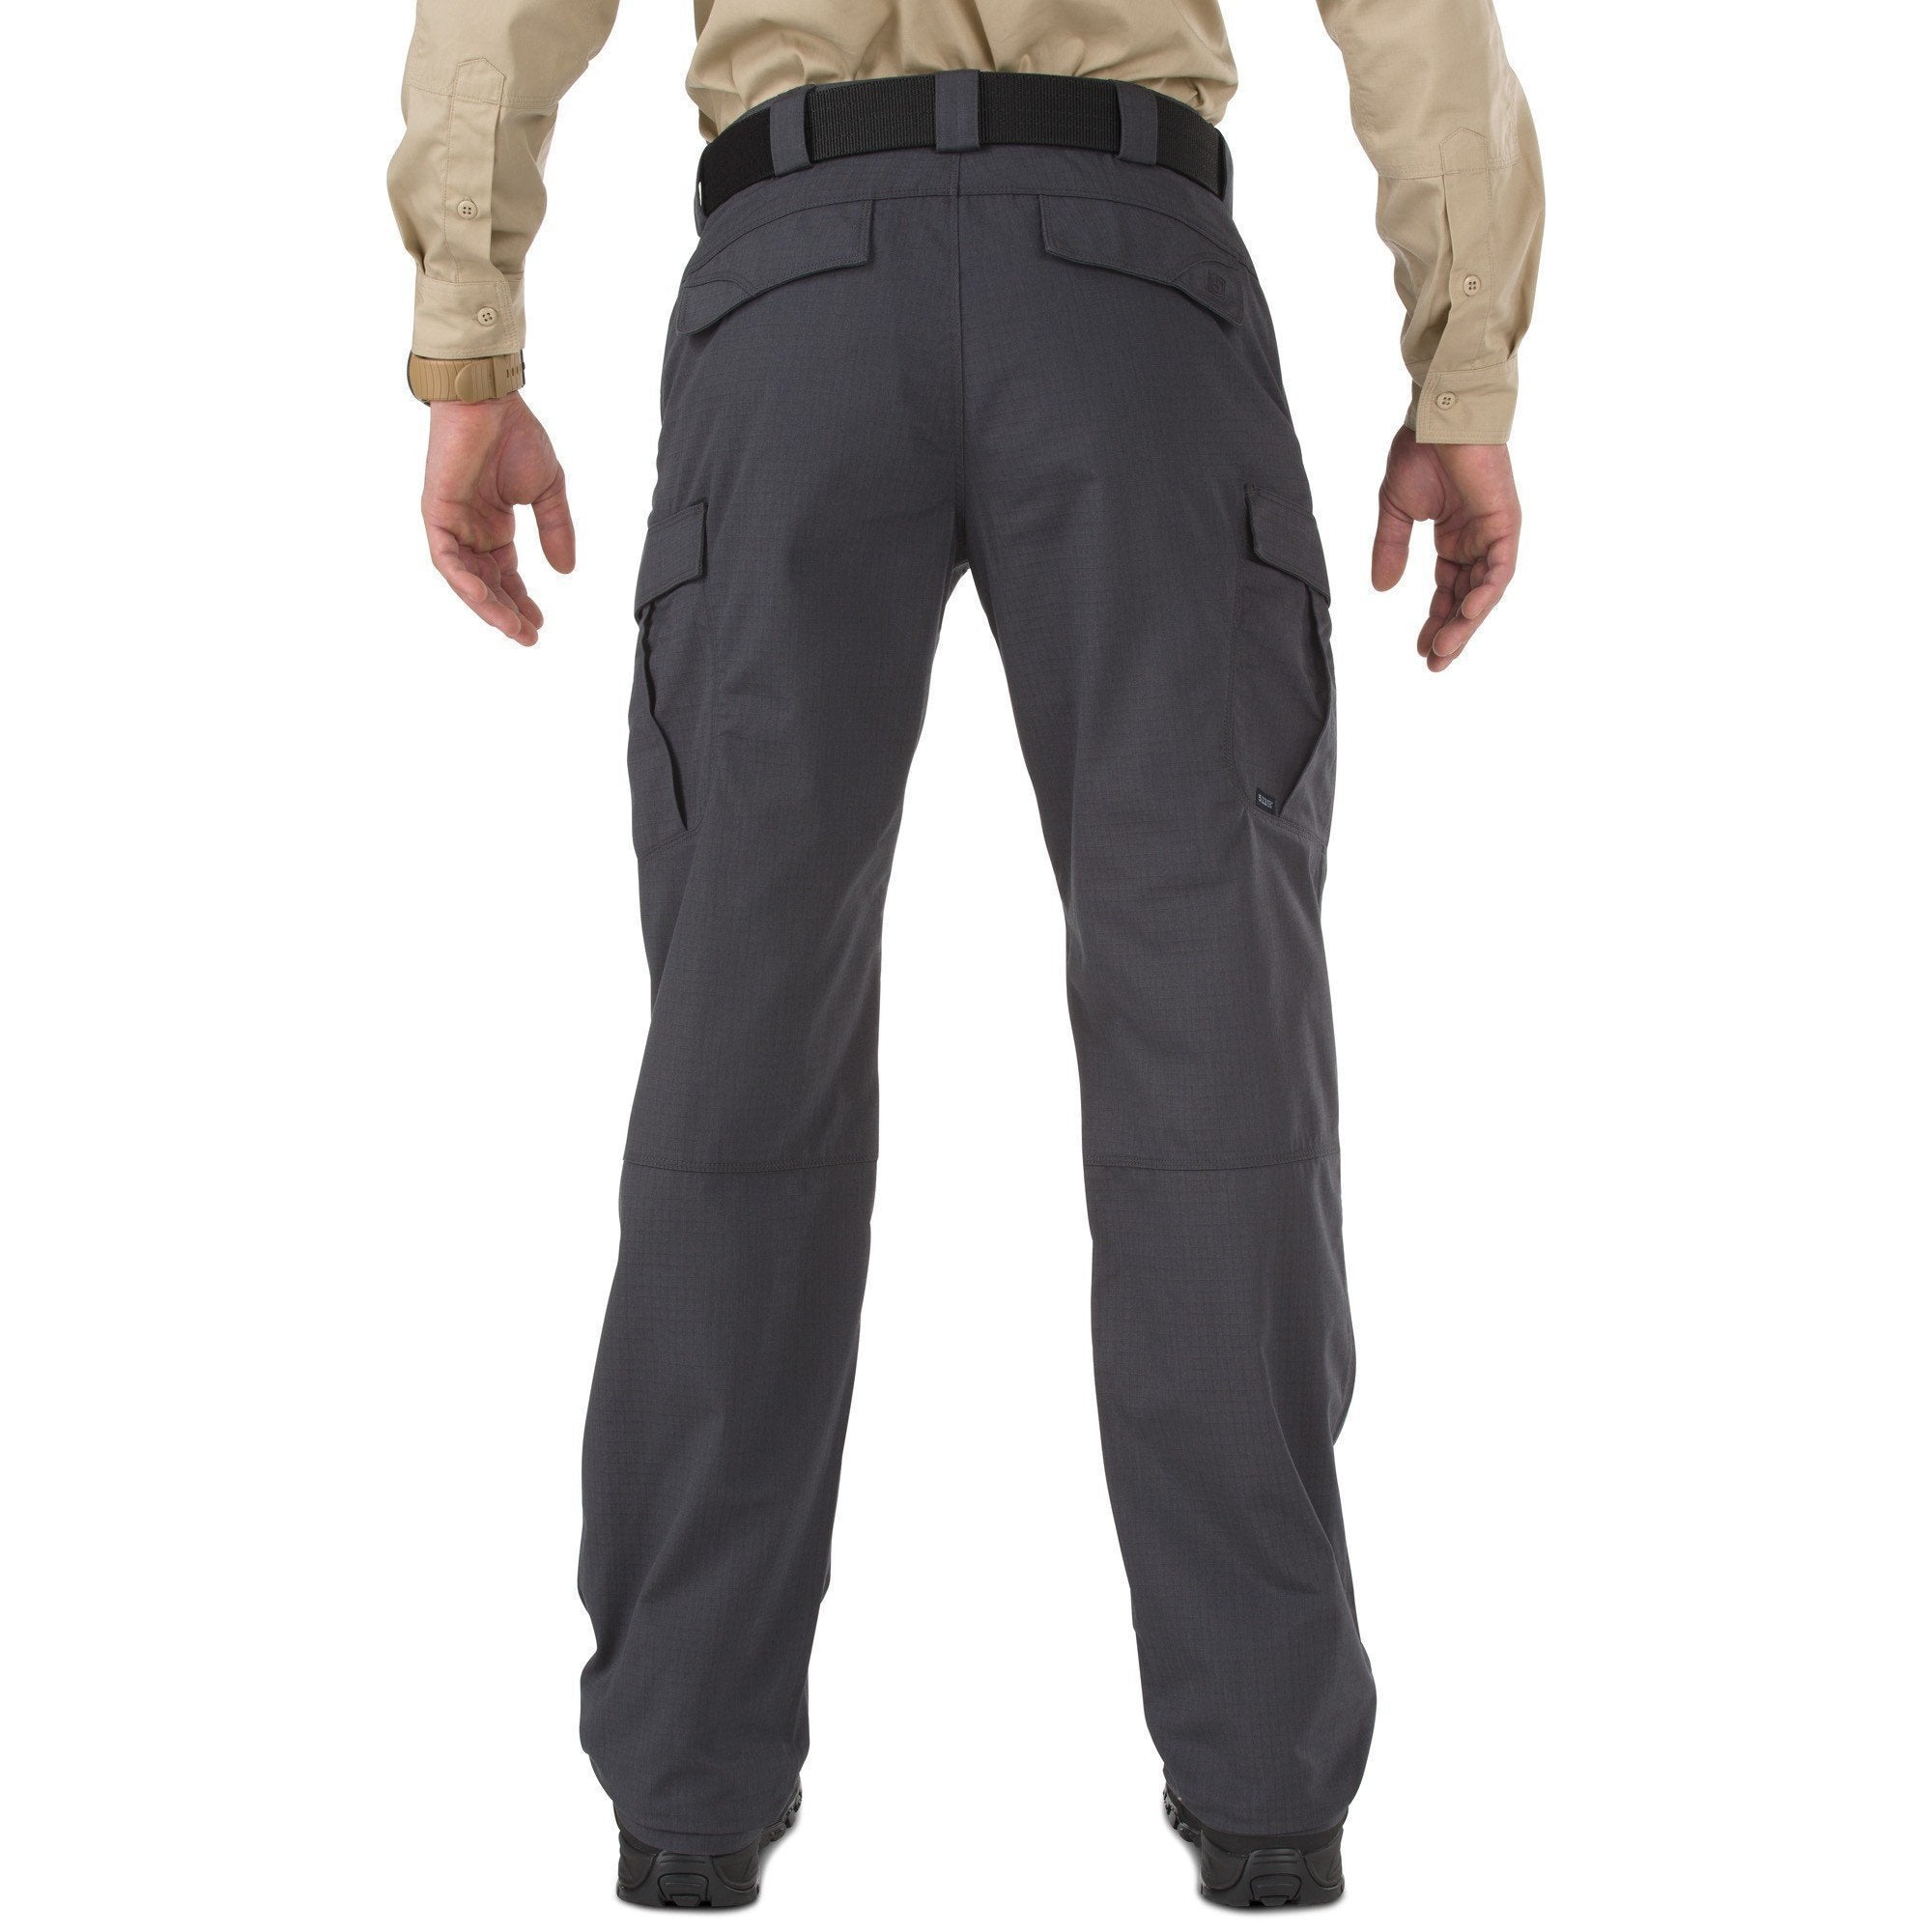 5.11 Tactical Stryke Pants with Flex-Tac - Charcoal Pants 5.11 Tactical Tactical Gear Supplier Tactical Distributors Australia